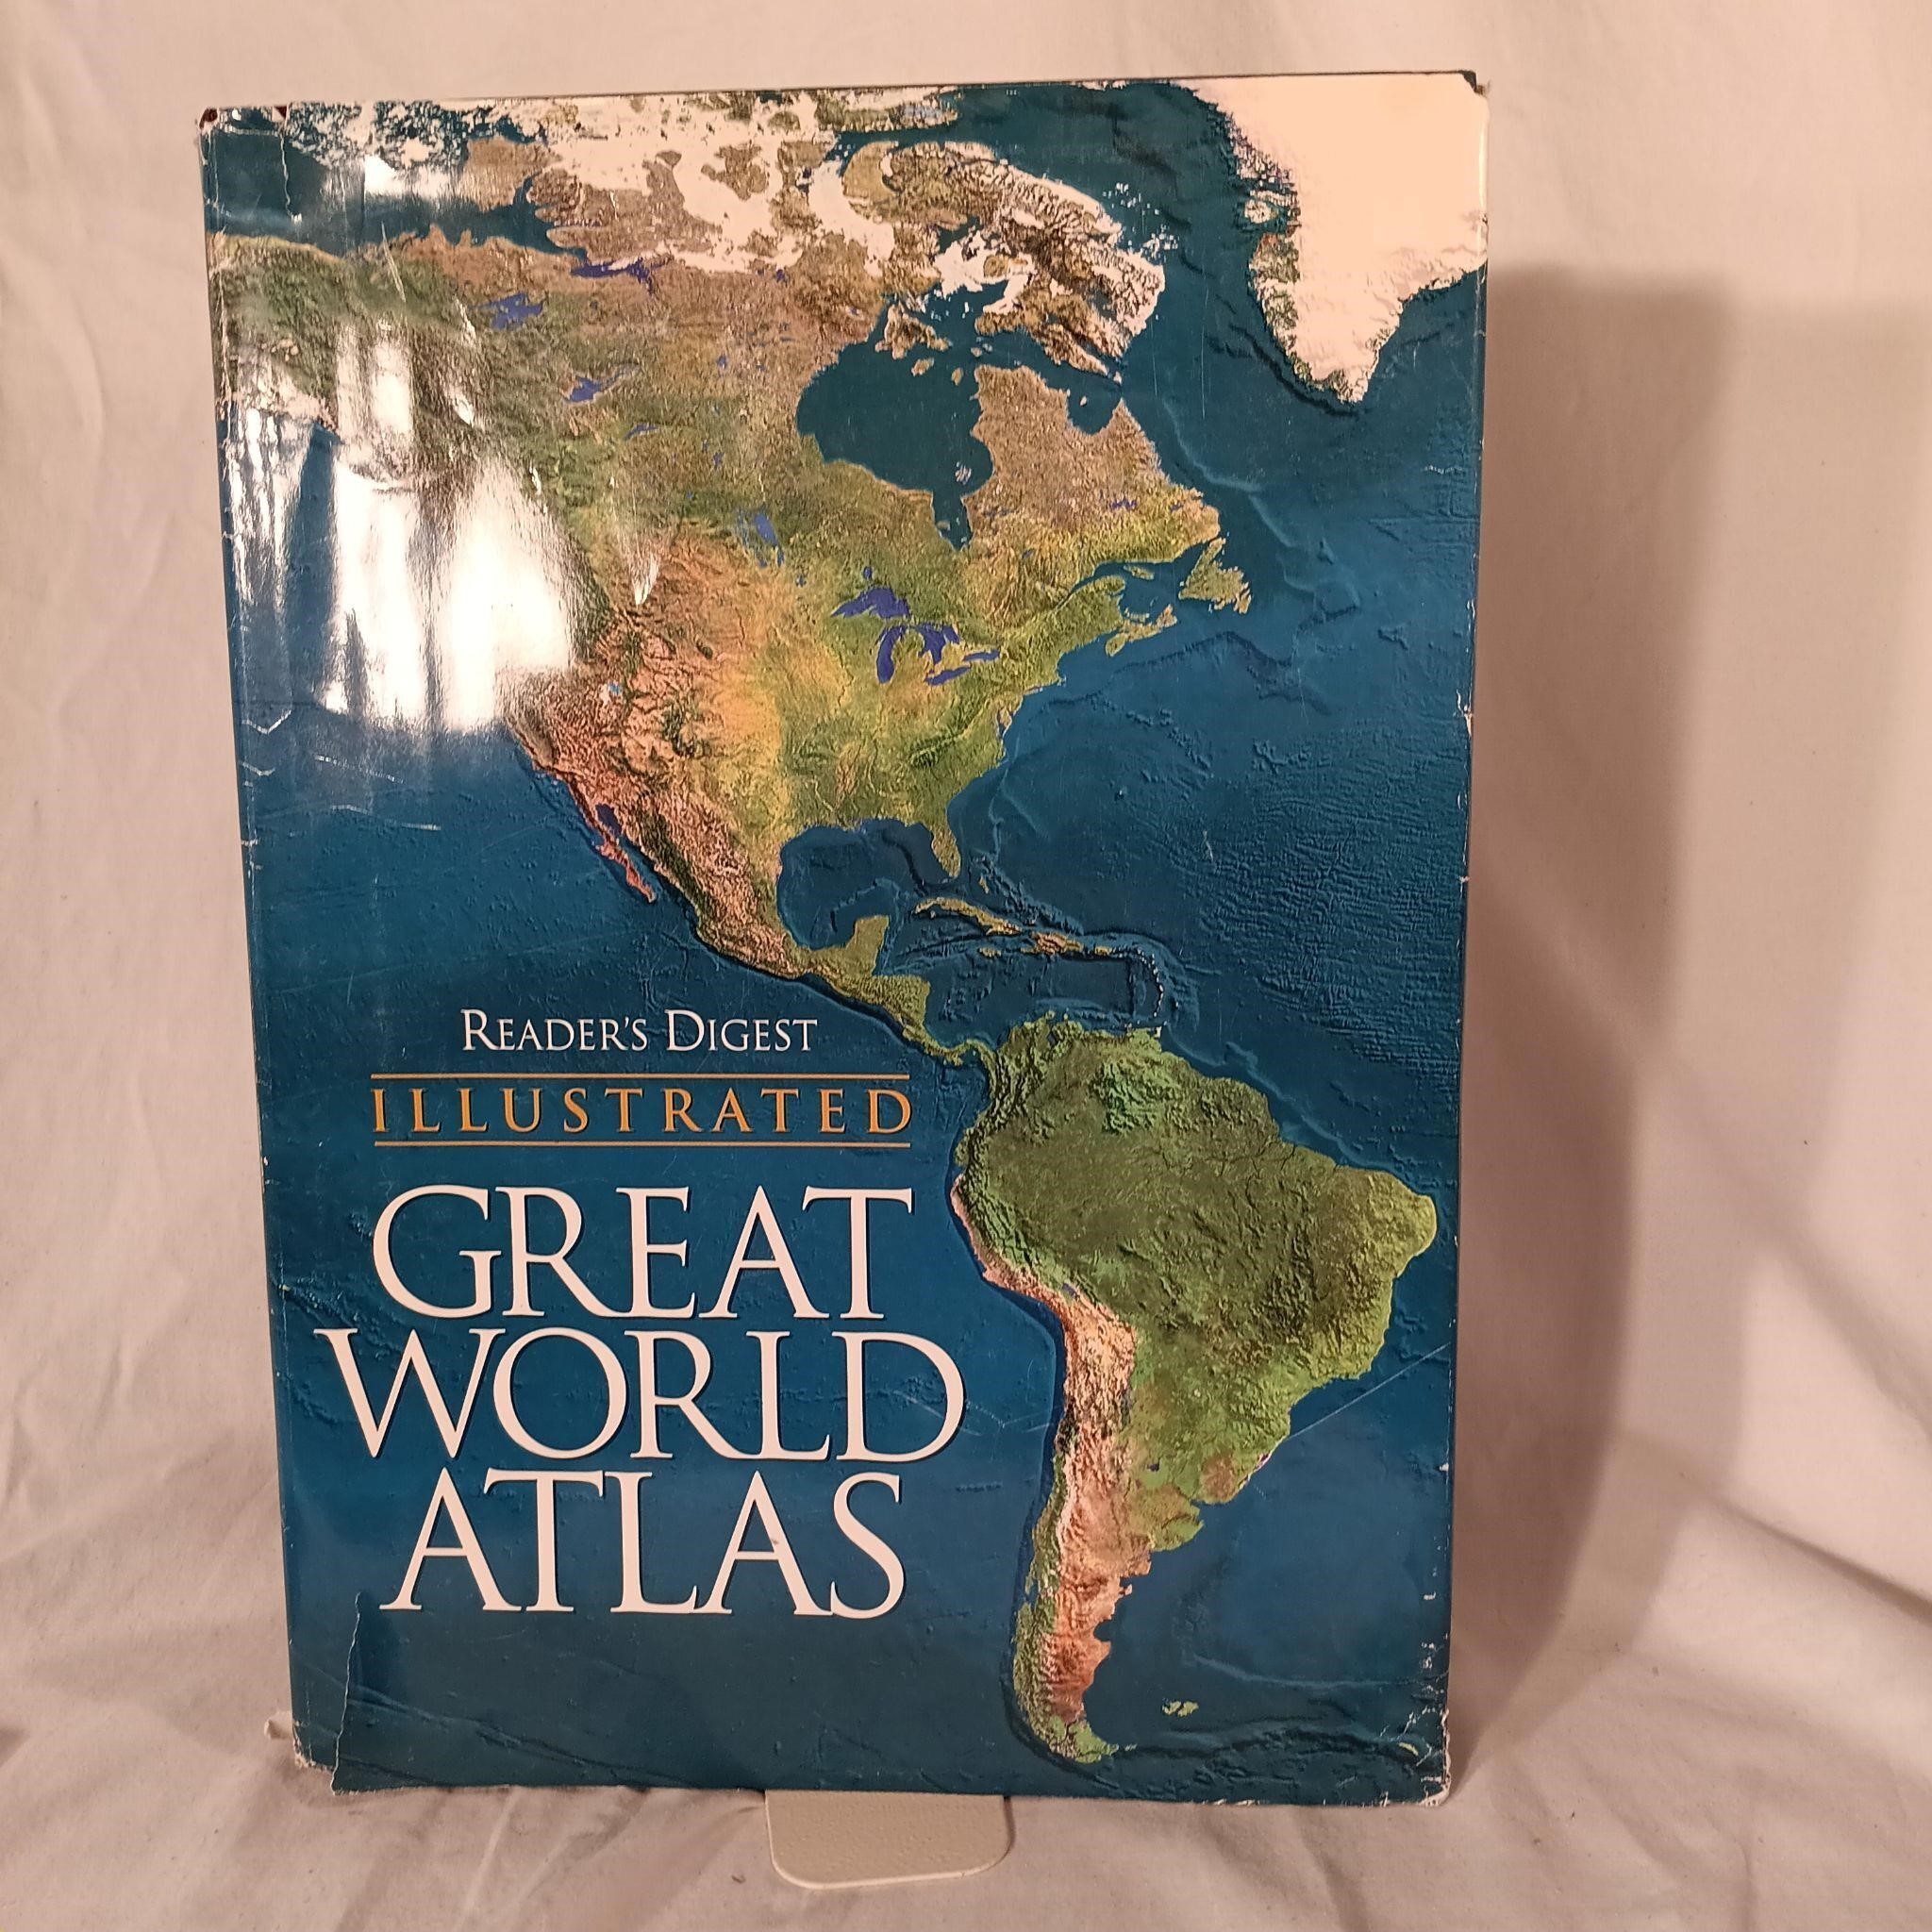 Reader's Digest "Great World Atlas"